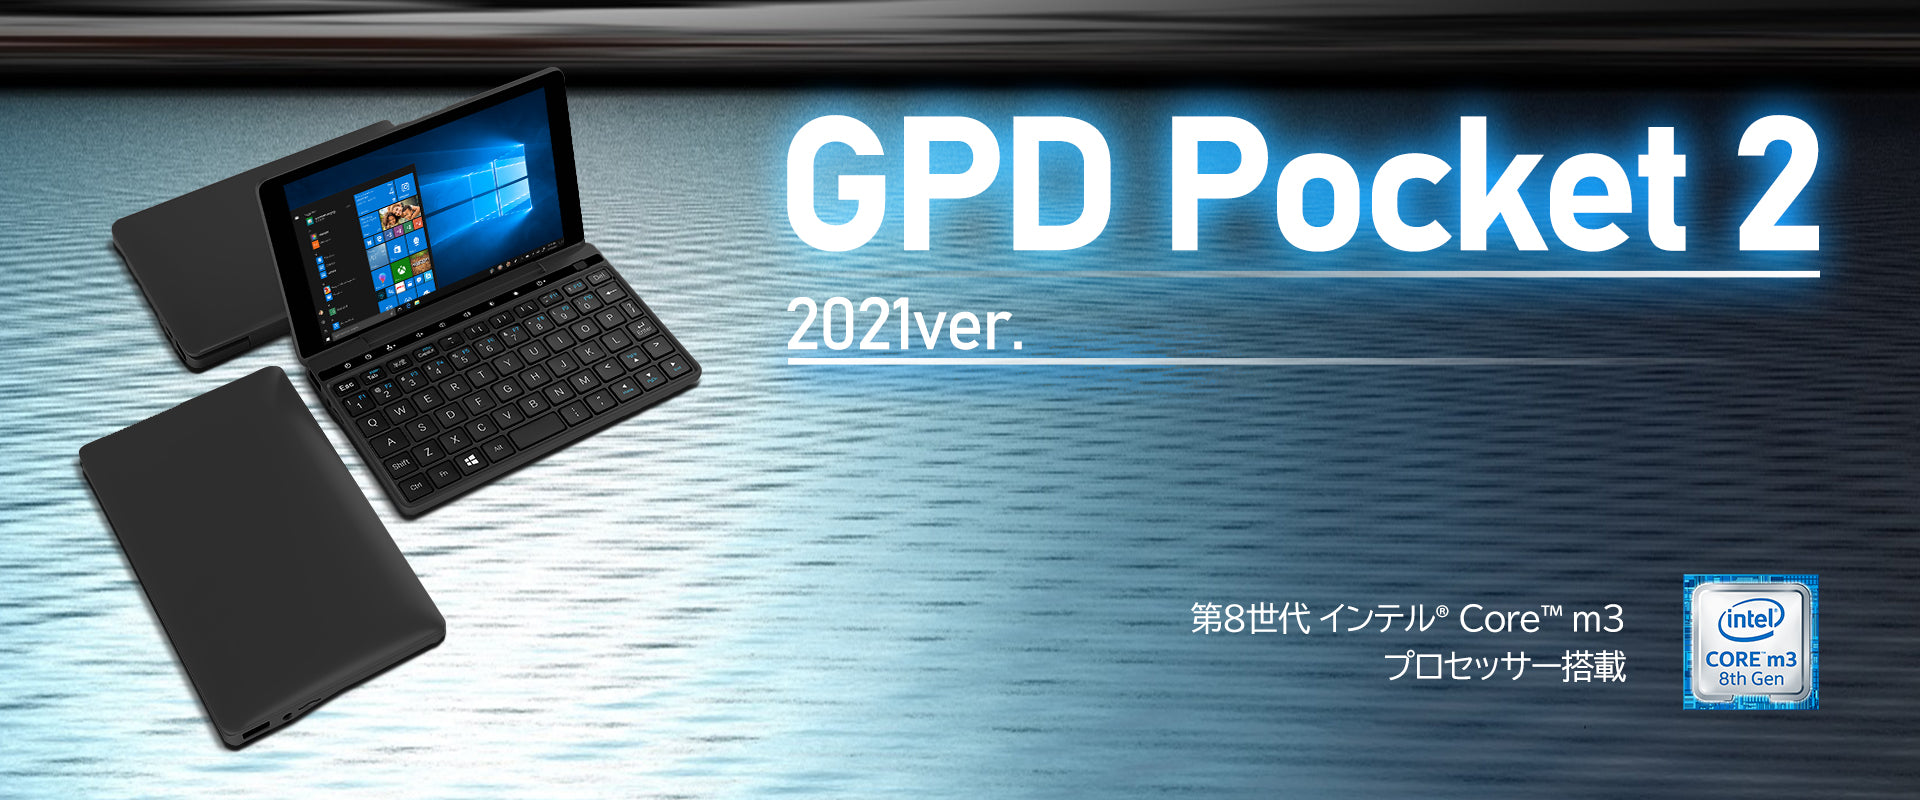 GPD Pocket2 2021ver – GPDダイレクト